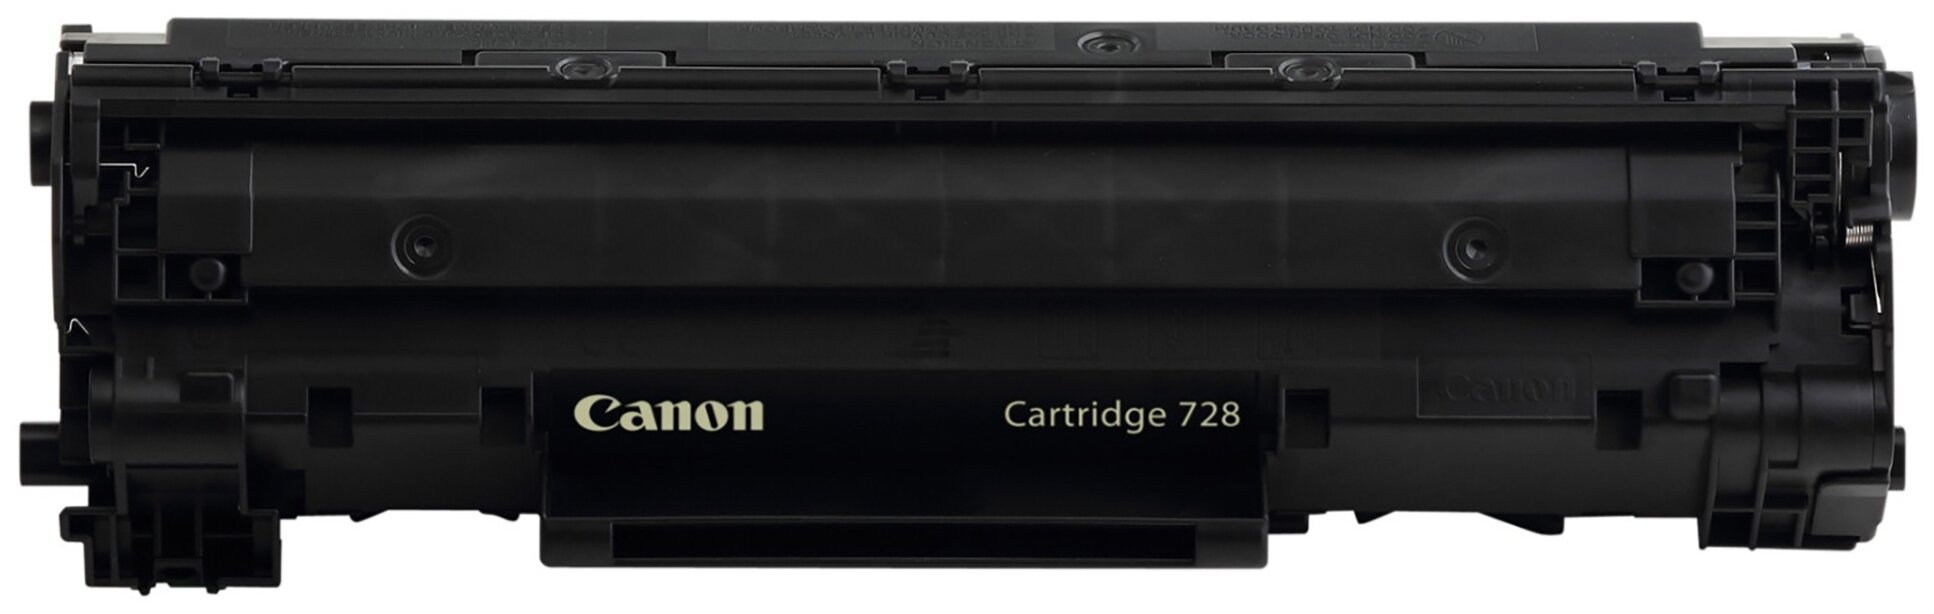 Картридж Canon 728 для MF4580dn, 4570dn, 4550dn, 4450, 4430, 4410 3500B002 (2100 страниц)